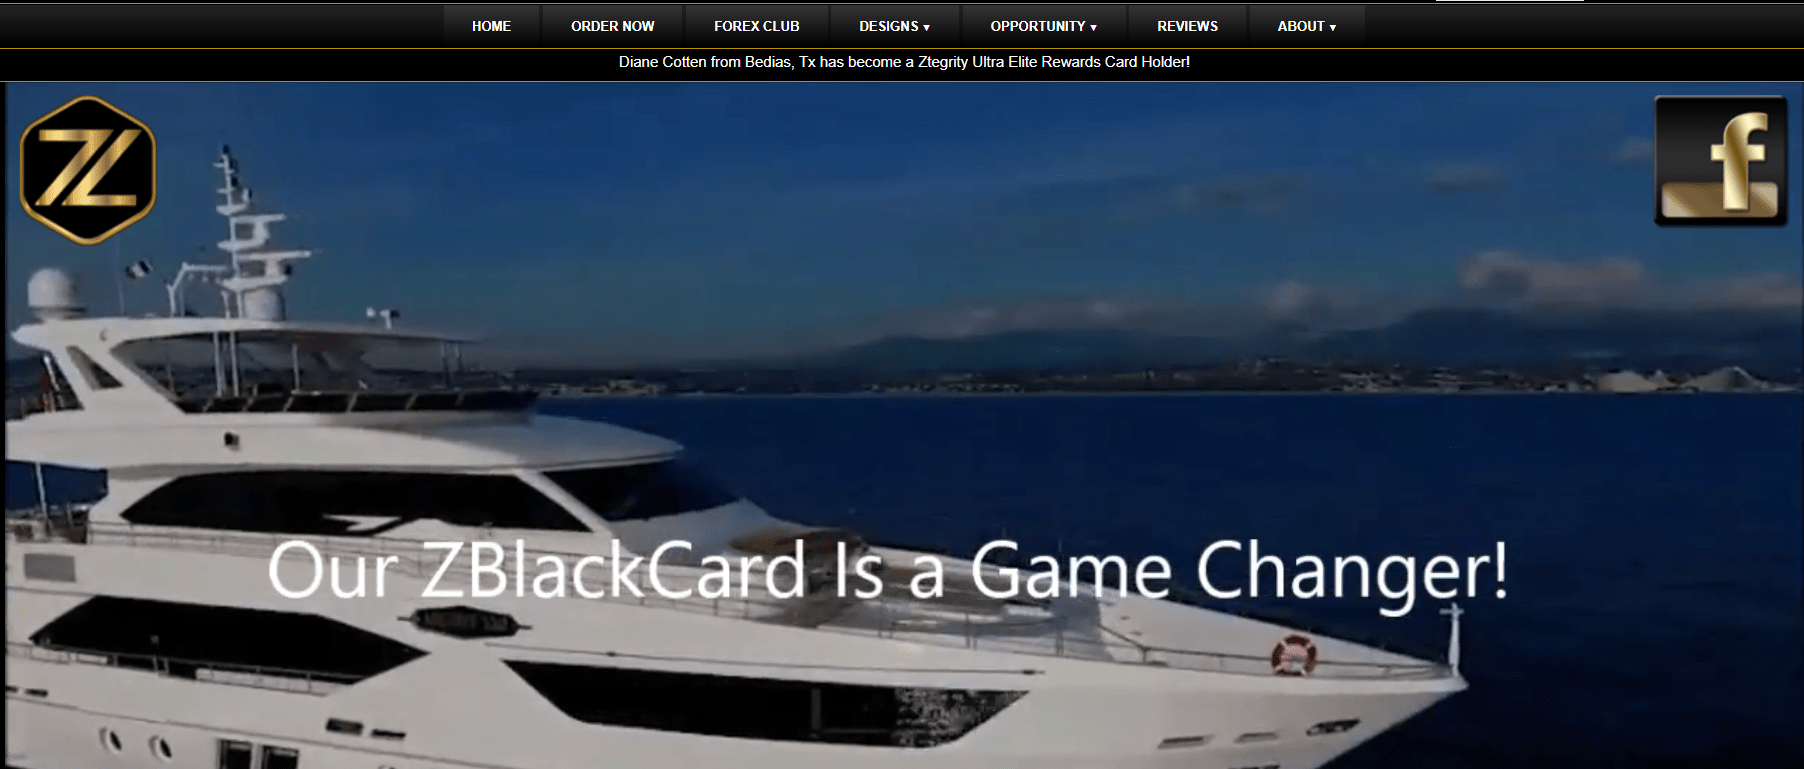 zblackcard website